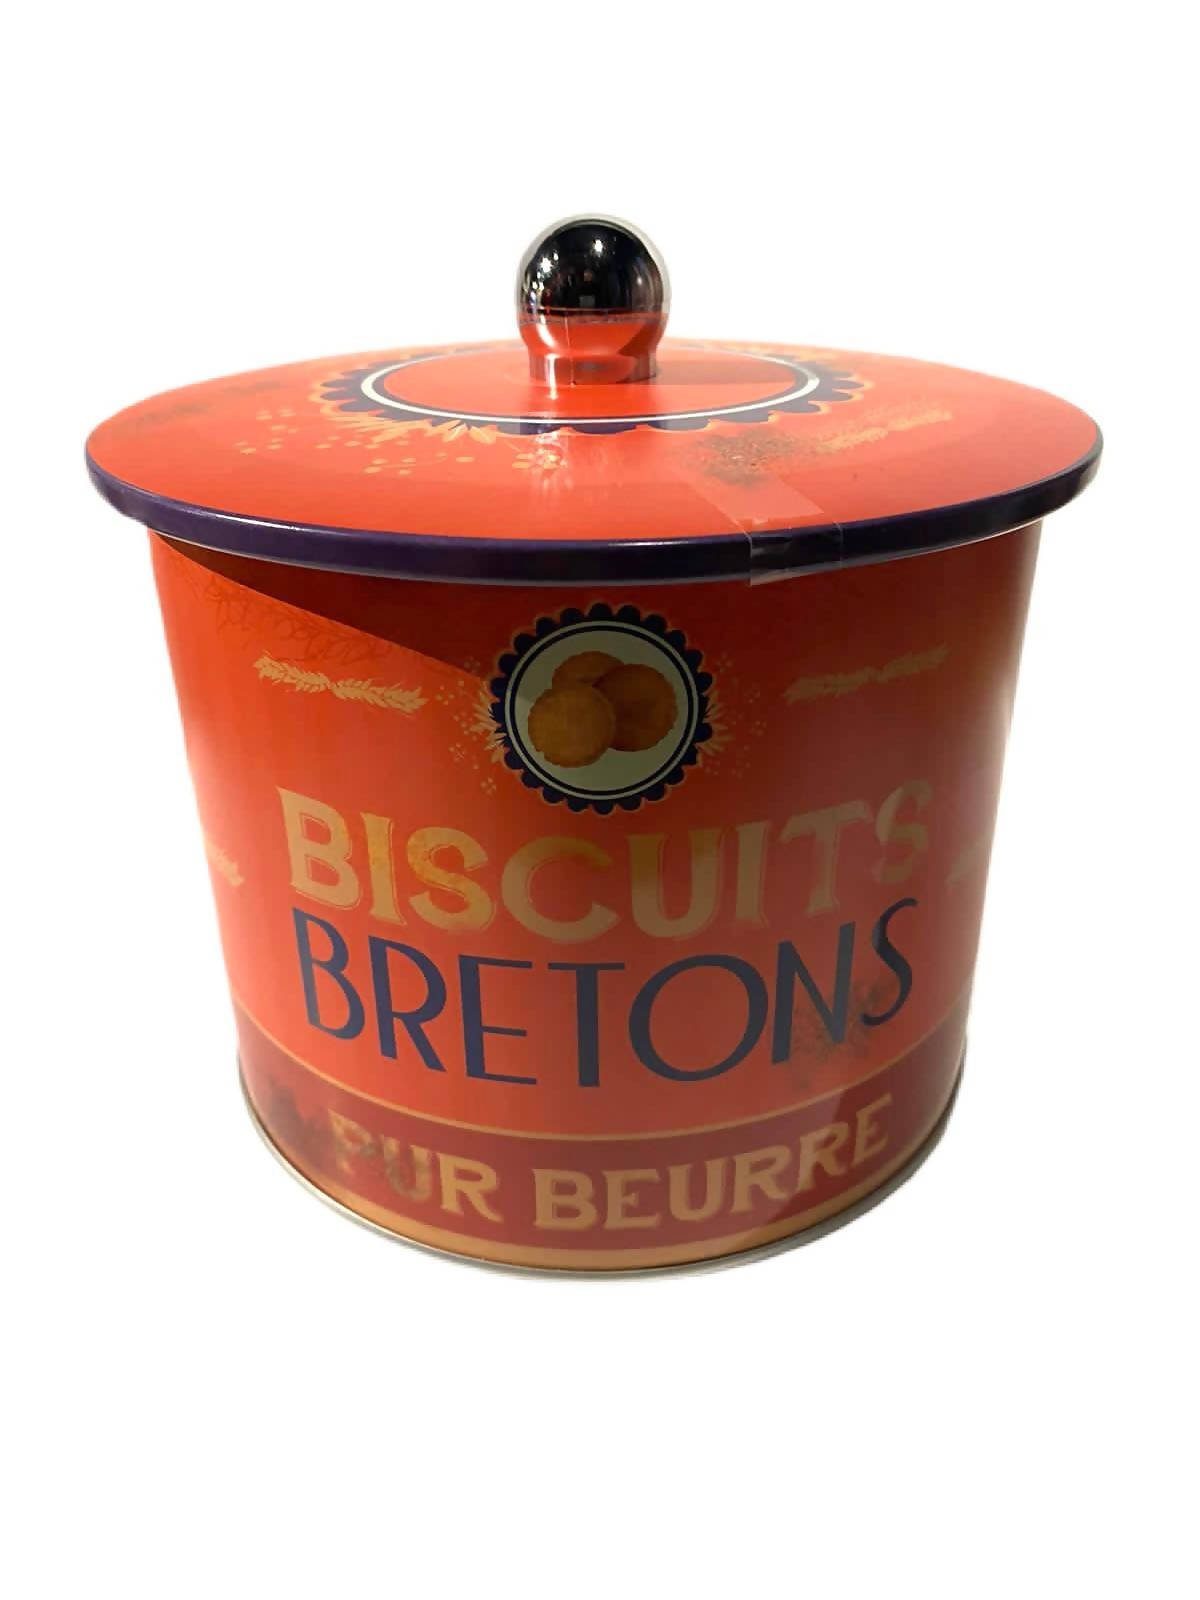 Peltier - Breton Cookies tin box